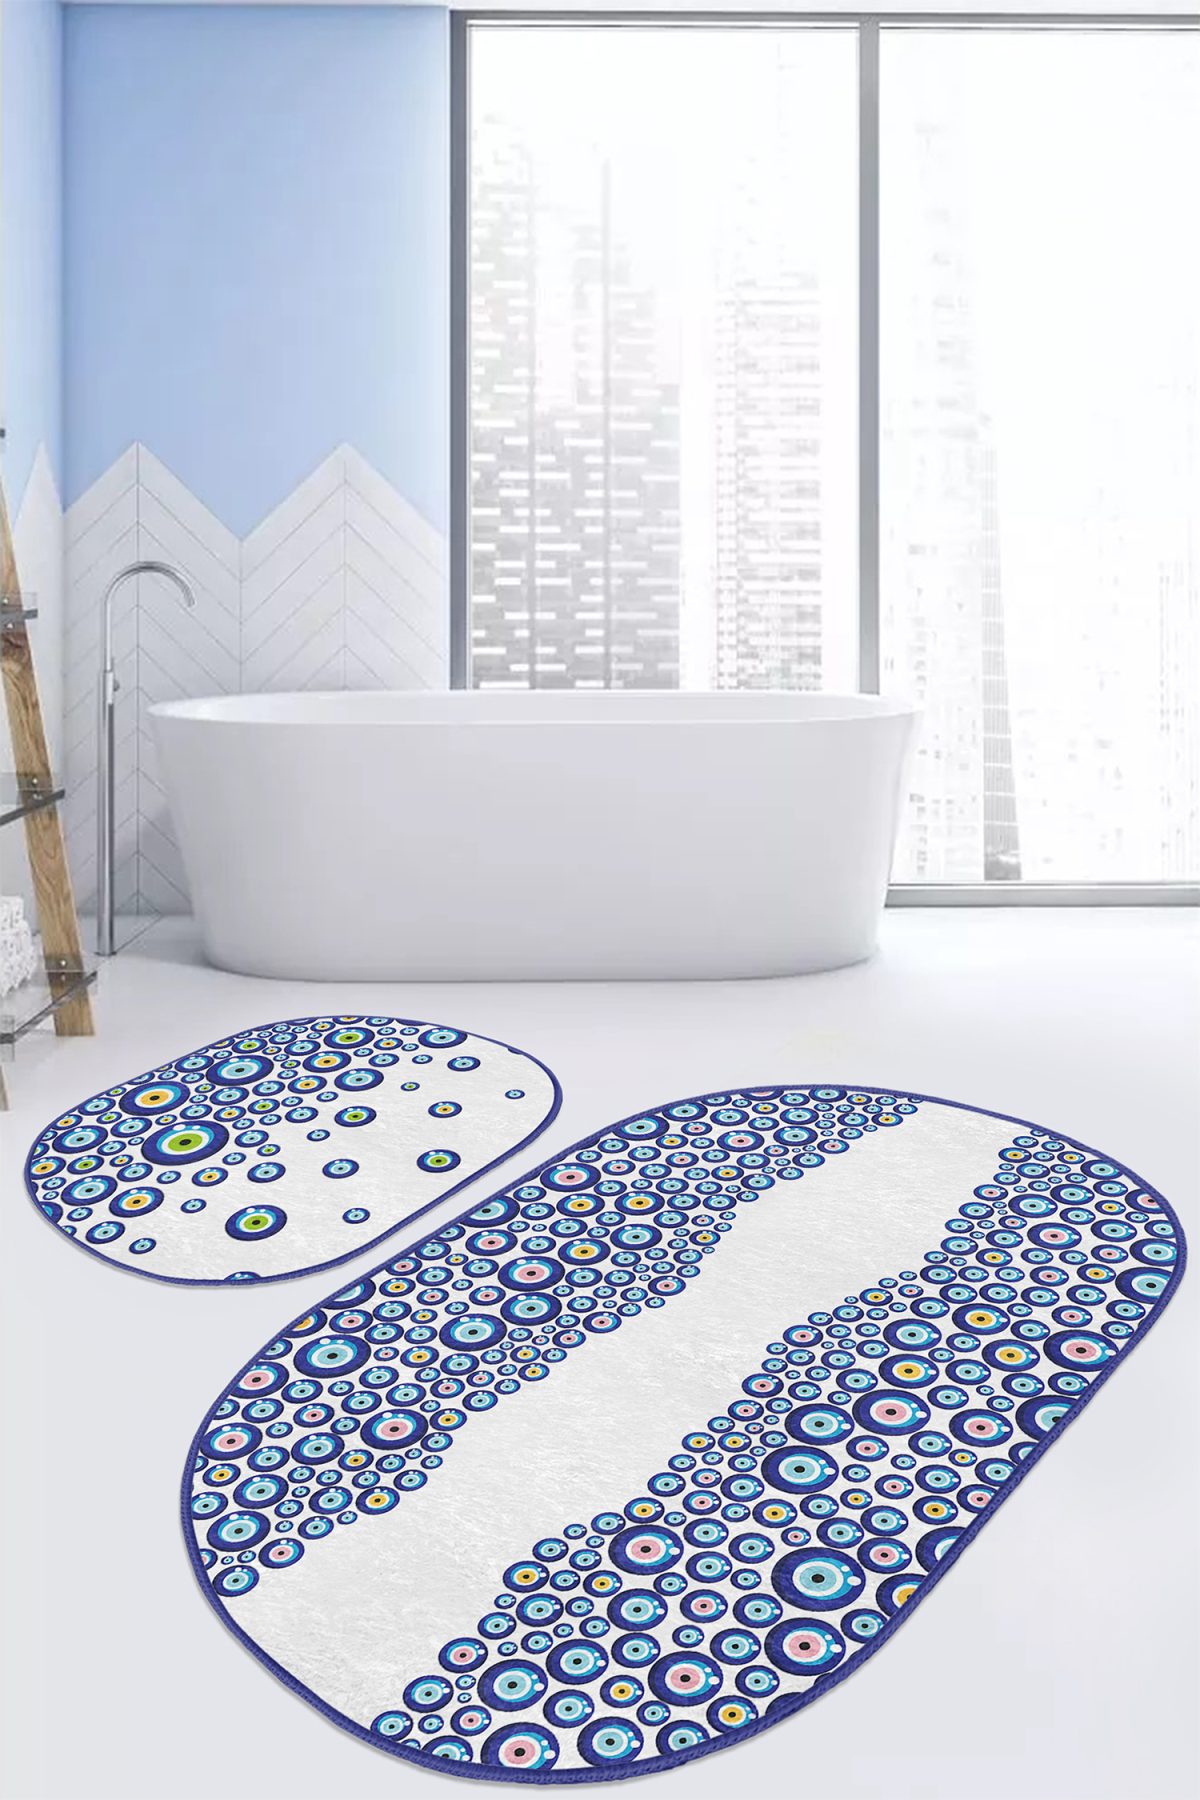 Beyaz Zemin Nazar Boncuklu Özel Tasarım 2'li Oval Kaymaz Tabanlı Banyo & Mutfak Paspas Takımı Realhomes